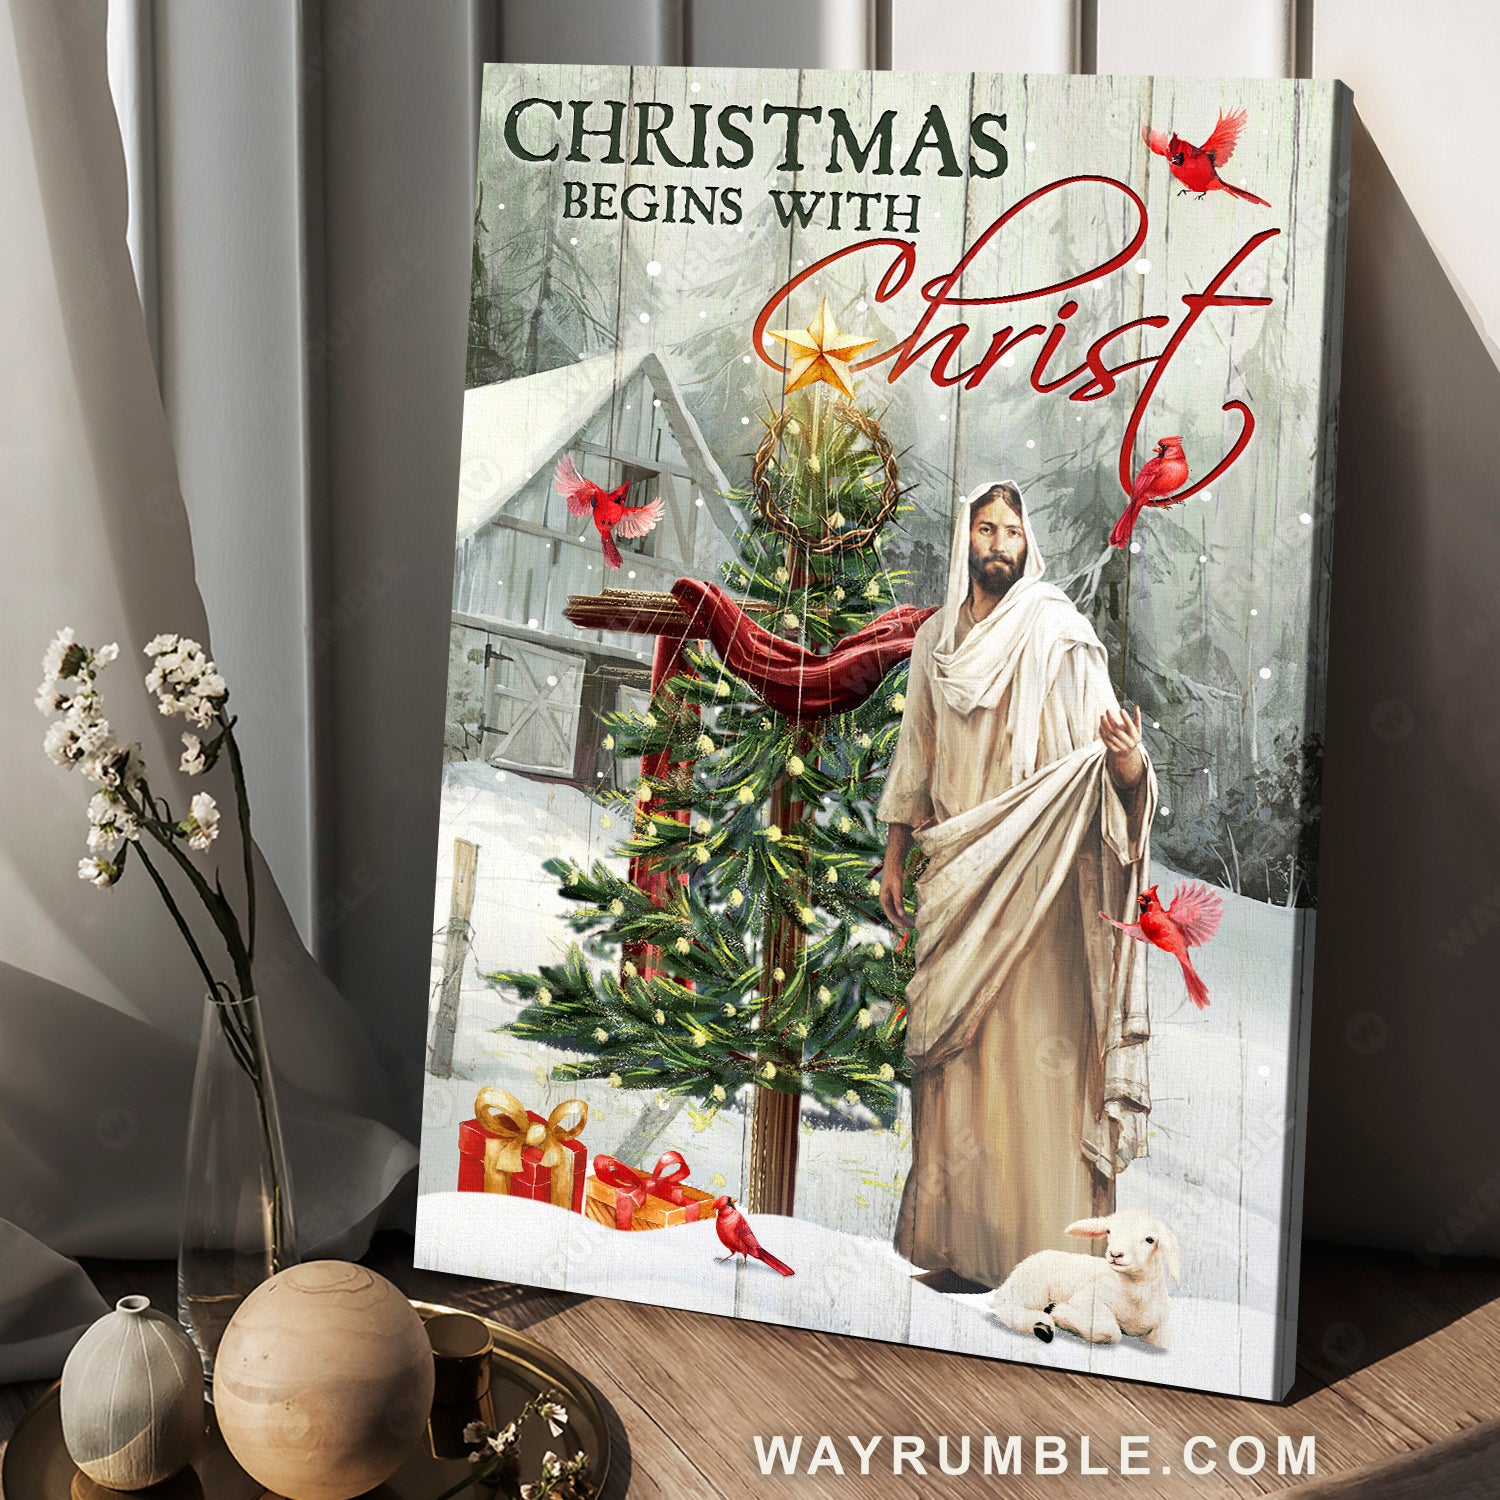 Stunning Jesus painting, Beautiful Christmas tree, Christmas begins with Christ - Jesus Portrait Canvas Prints, Home Decor Wall Art